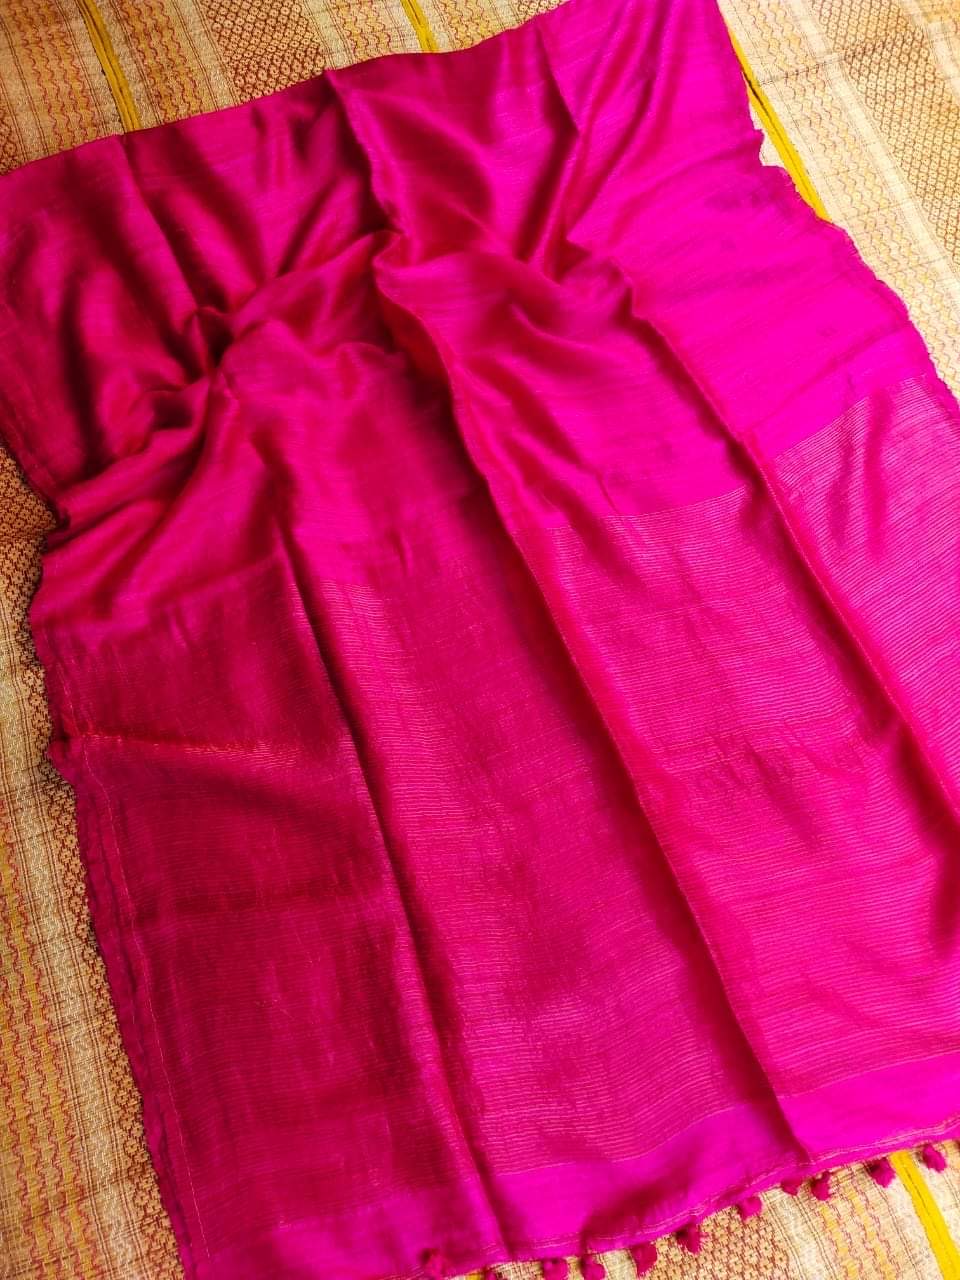 Plain motka than saree from Bengal